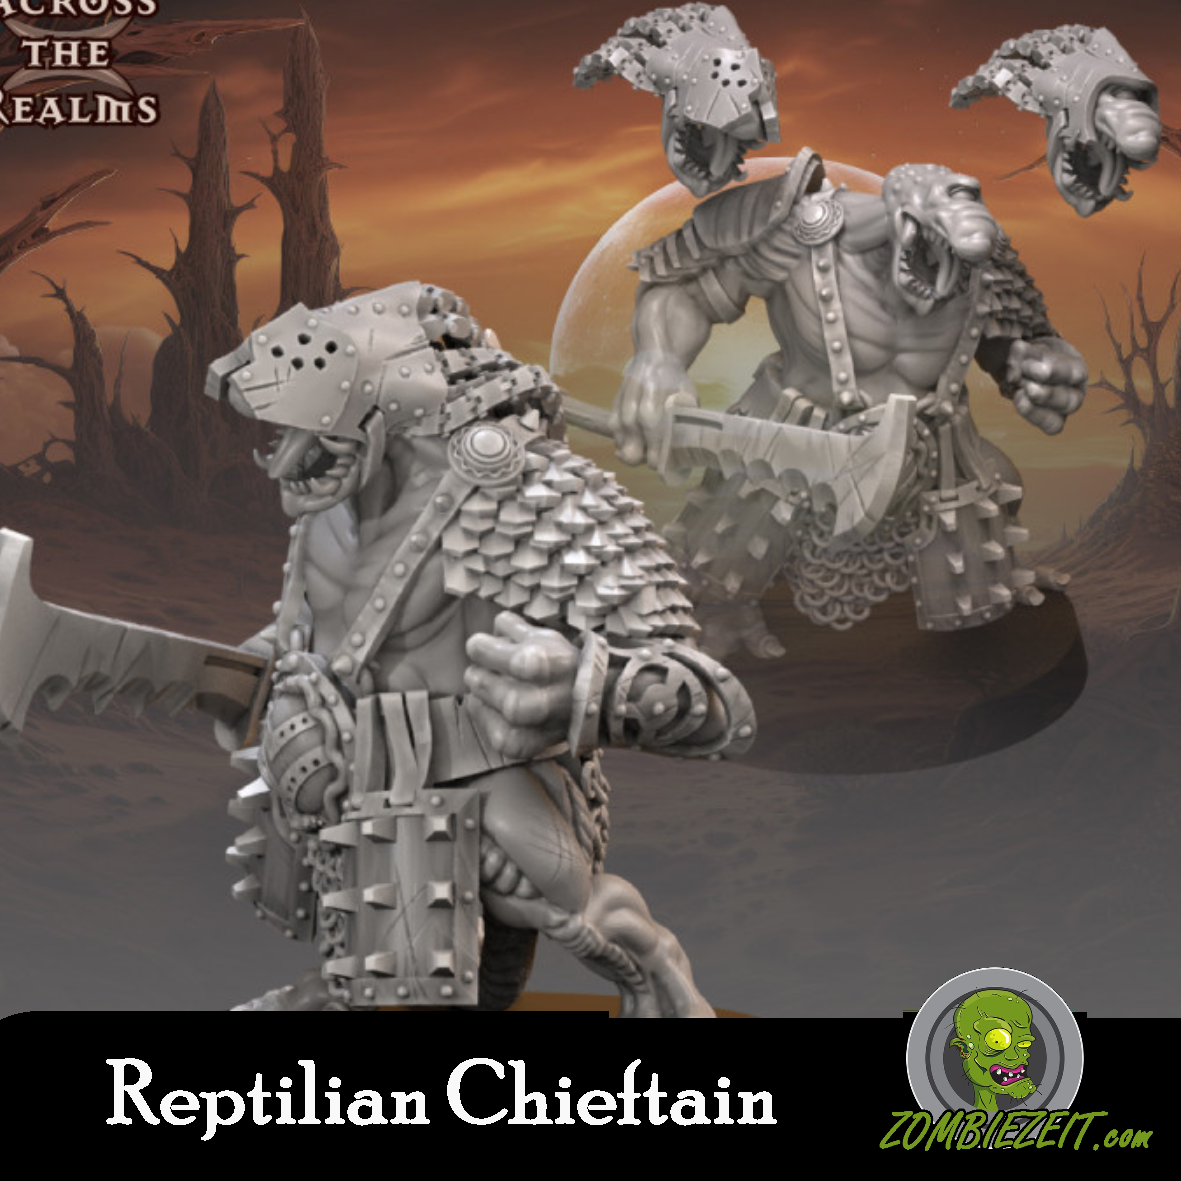 Reptilian Chieftain